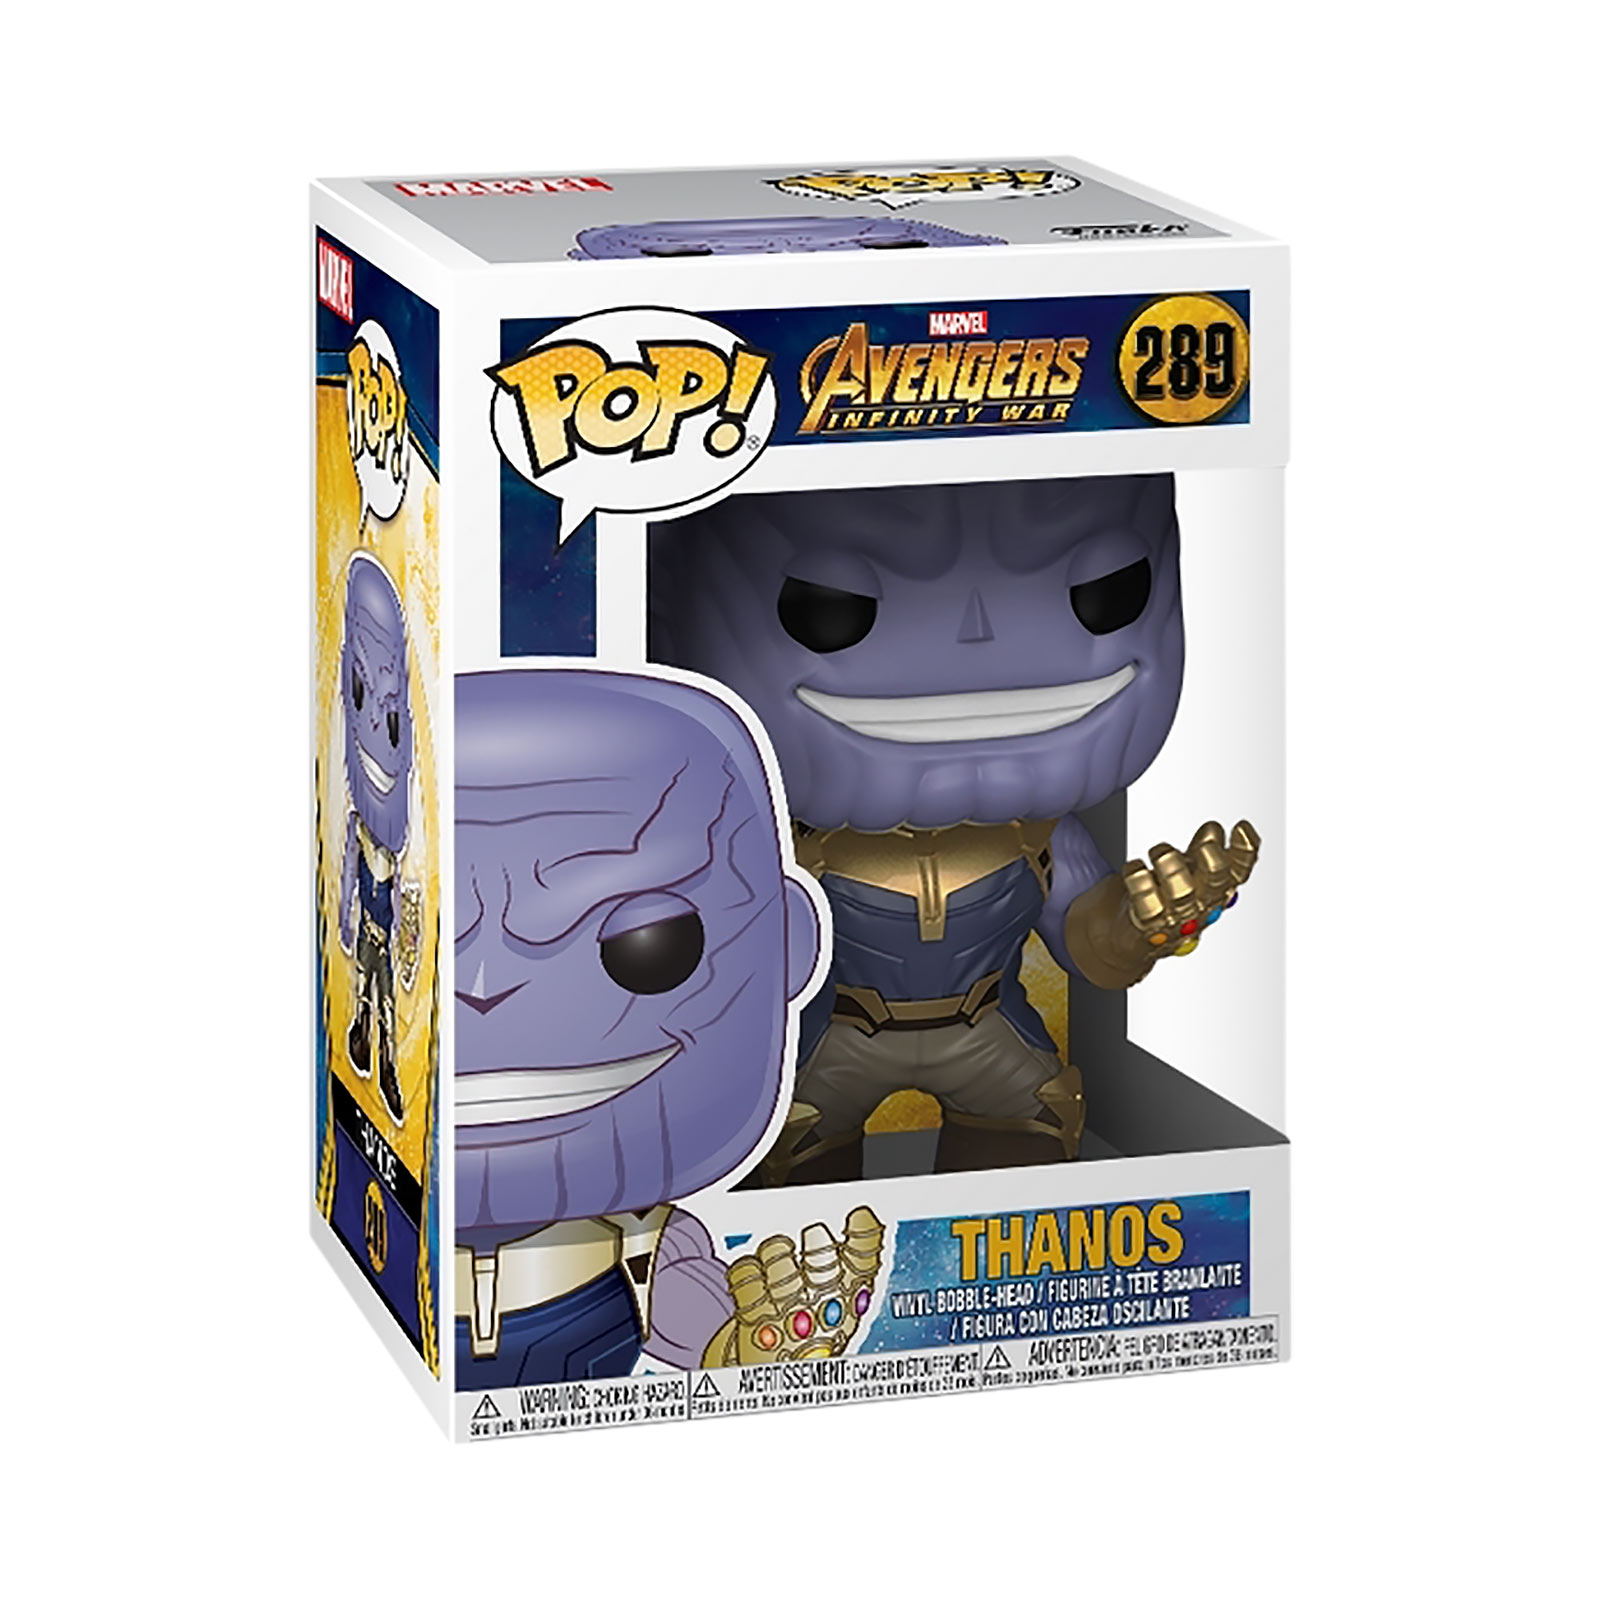 Avengers - Thanos Infinity War Funko Pop Bobblehead Figure